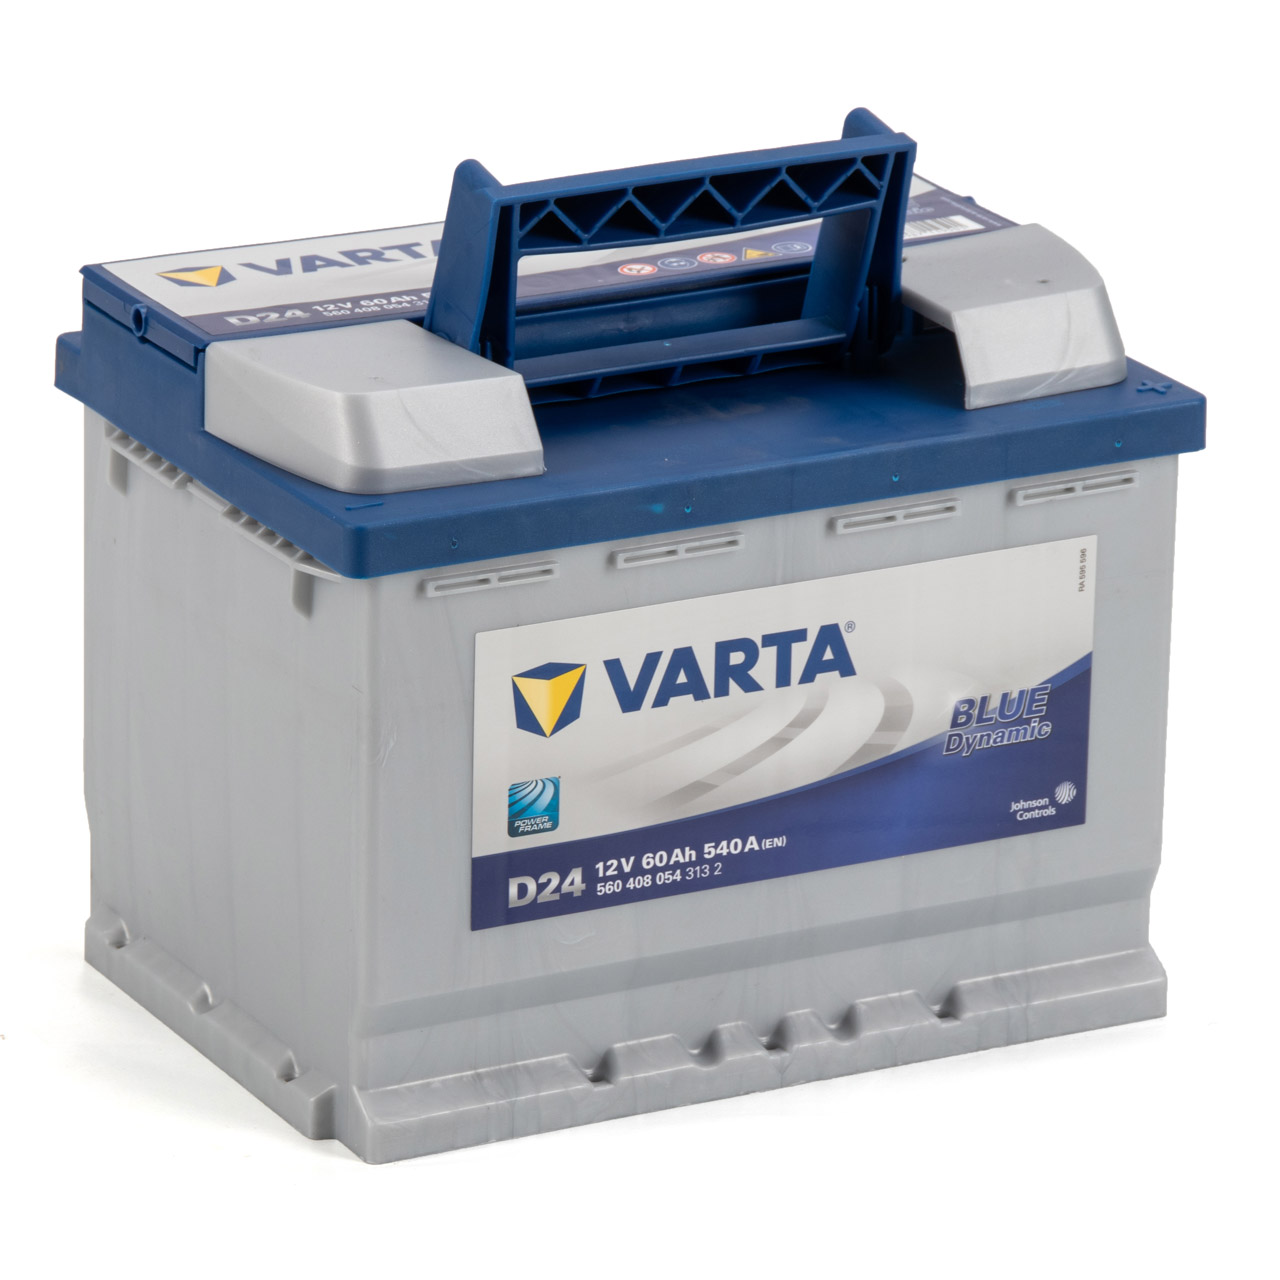 VARTA BLUE dynamic D24 Autobatterie Batterie Starterbatterie 12V 60Ah 540A